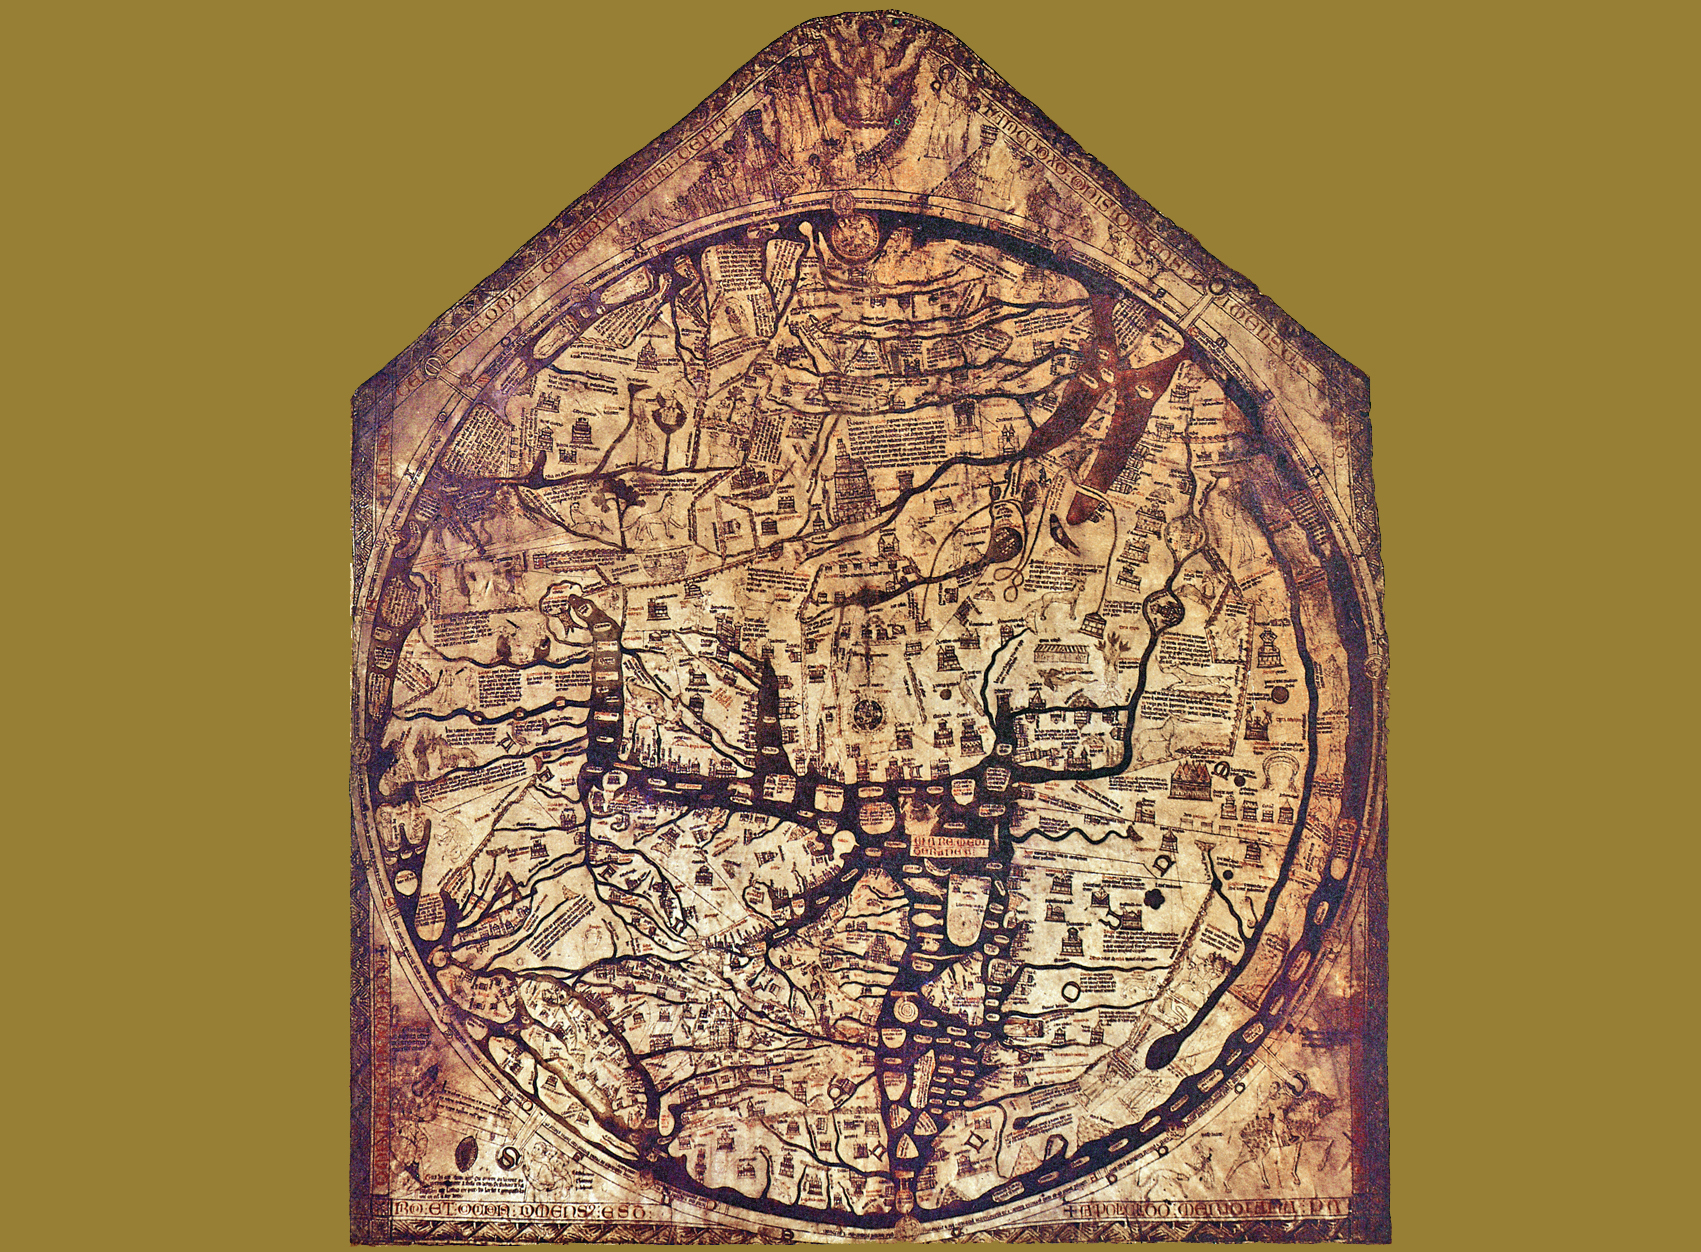 Hereford-Mappa-Mundi-with-background